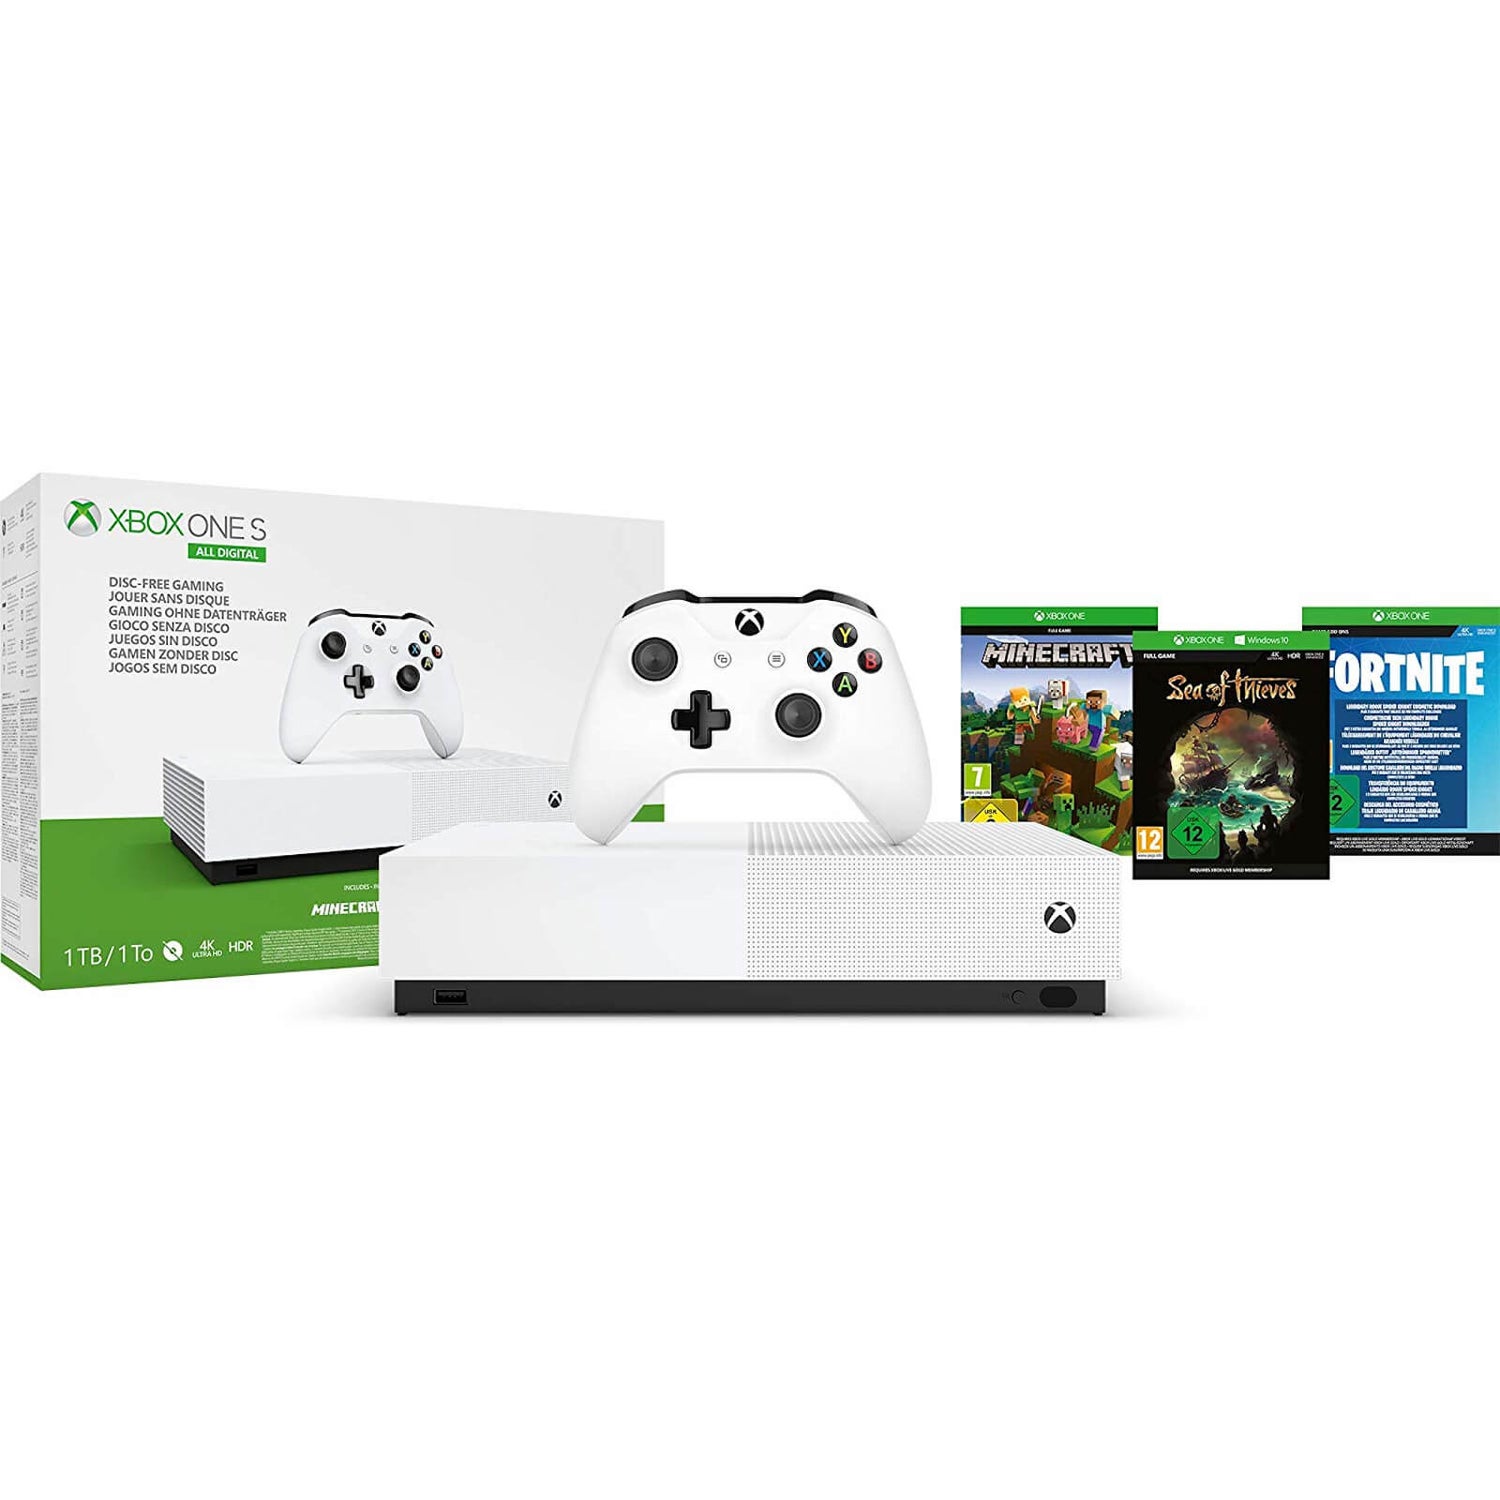 Microsoft Xbox One S ALL DIGITAL EDITION